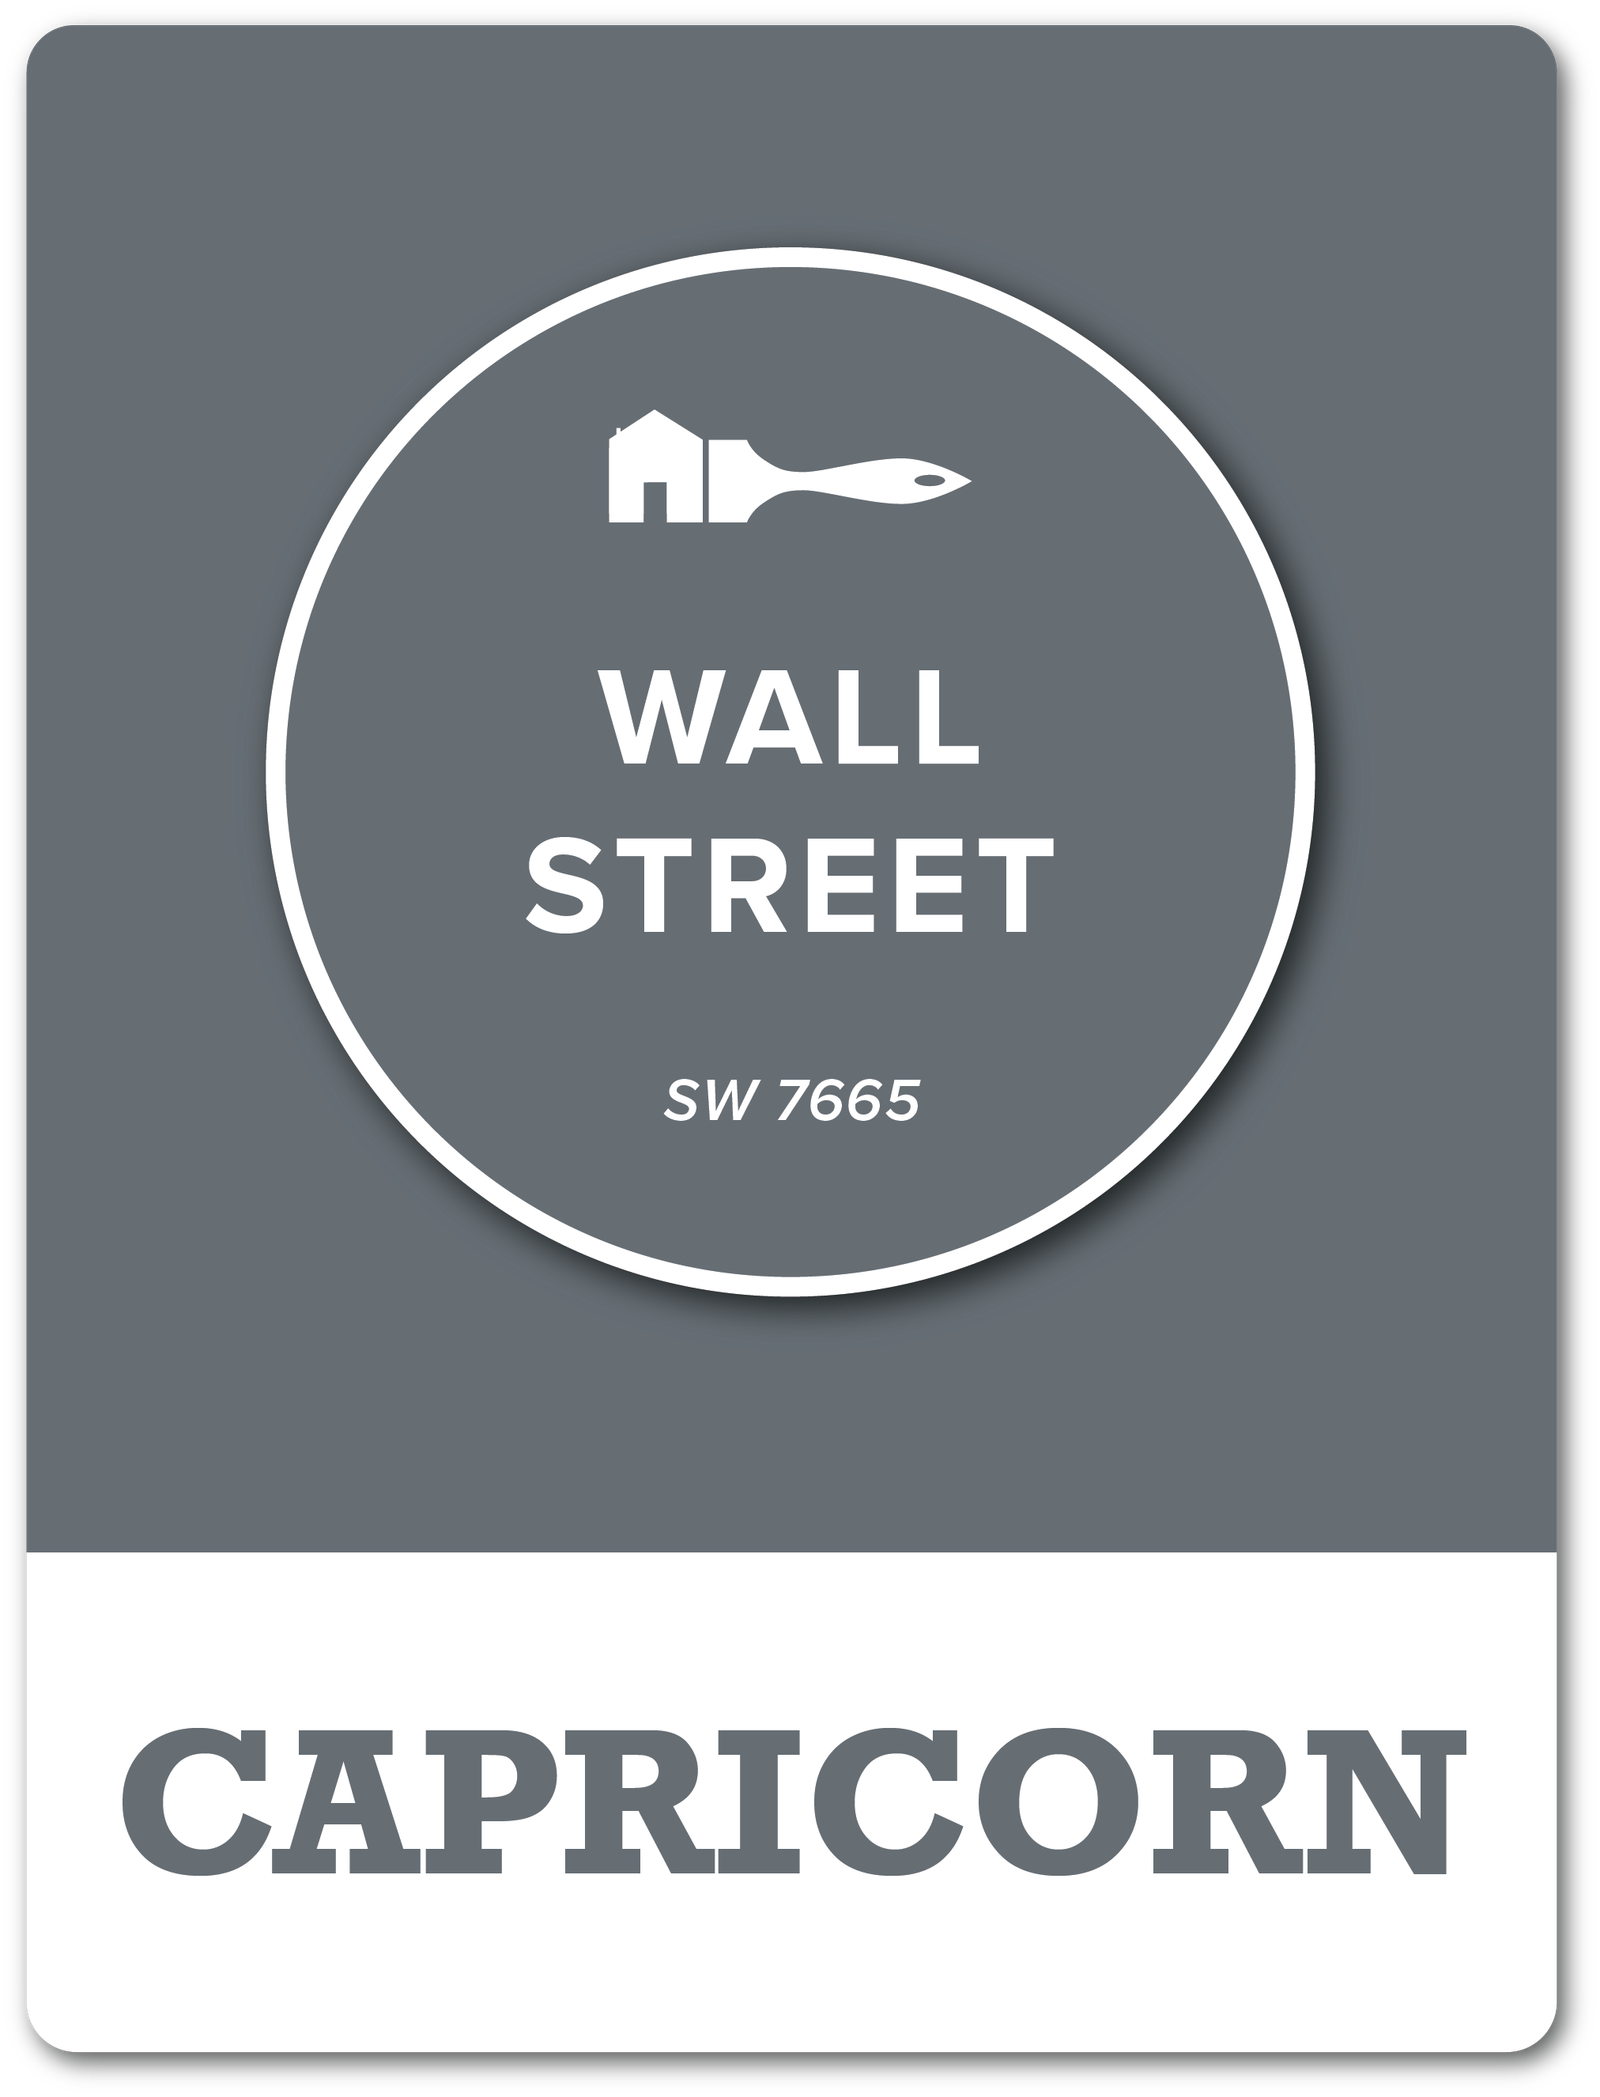   Capricorn (December 22 – January 19) - Wall Street